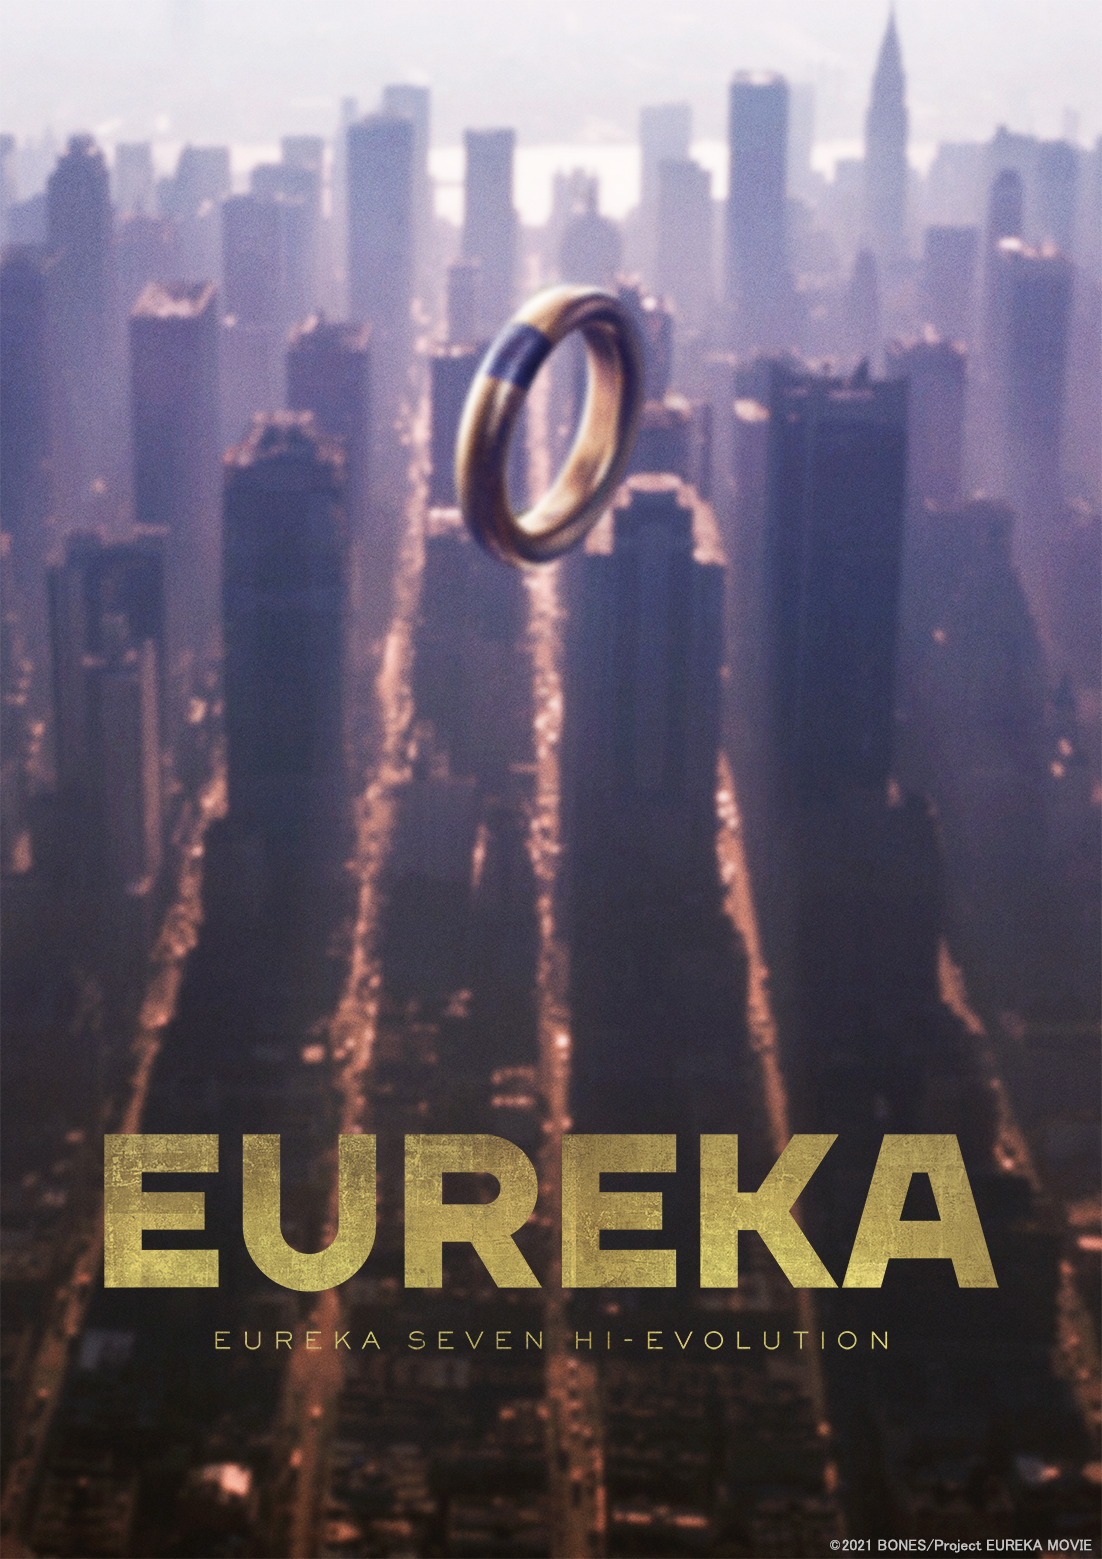 eureka-seven-high-evoution-3 New Promo Video for "Eureka Seven Hi-Evolution 3 Movie" Features Cool Battle Scenes! Out November 26!